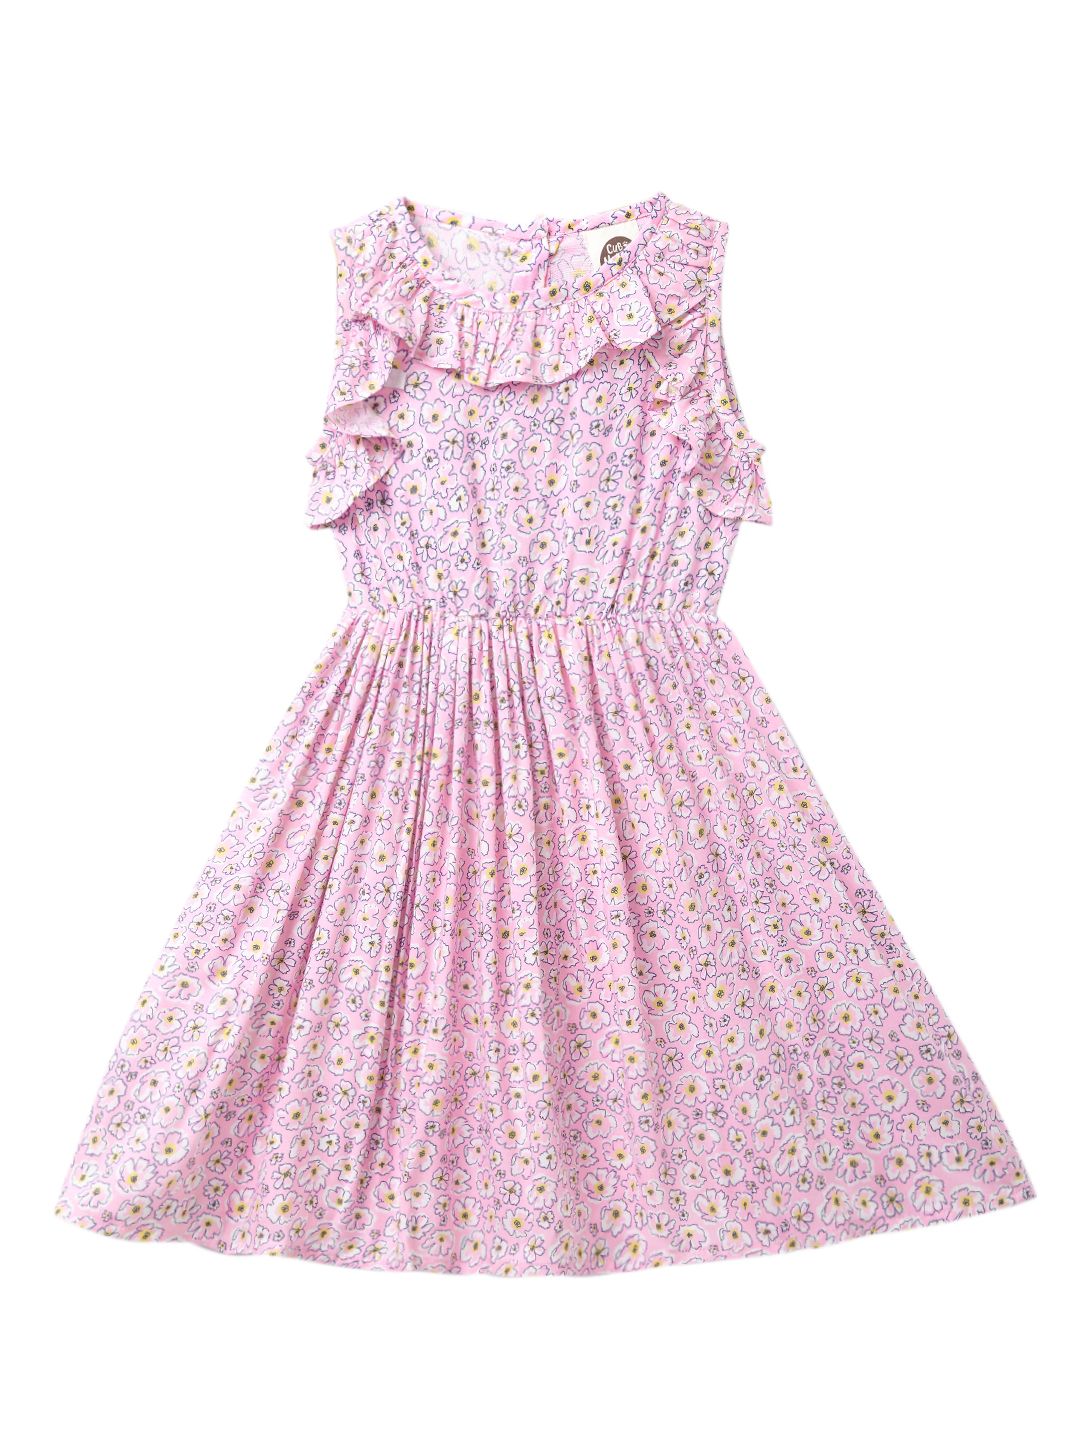  Girls Rayon Knee Length Dress,Light Pink